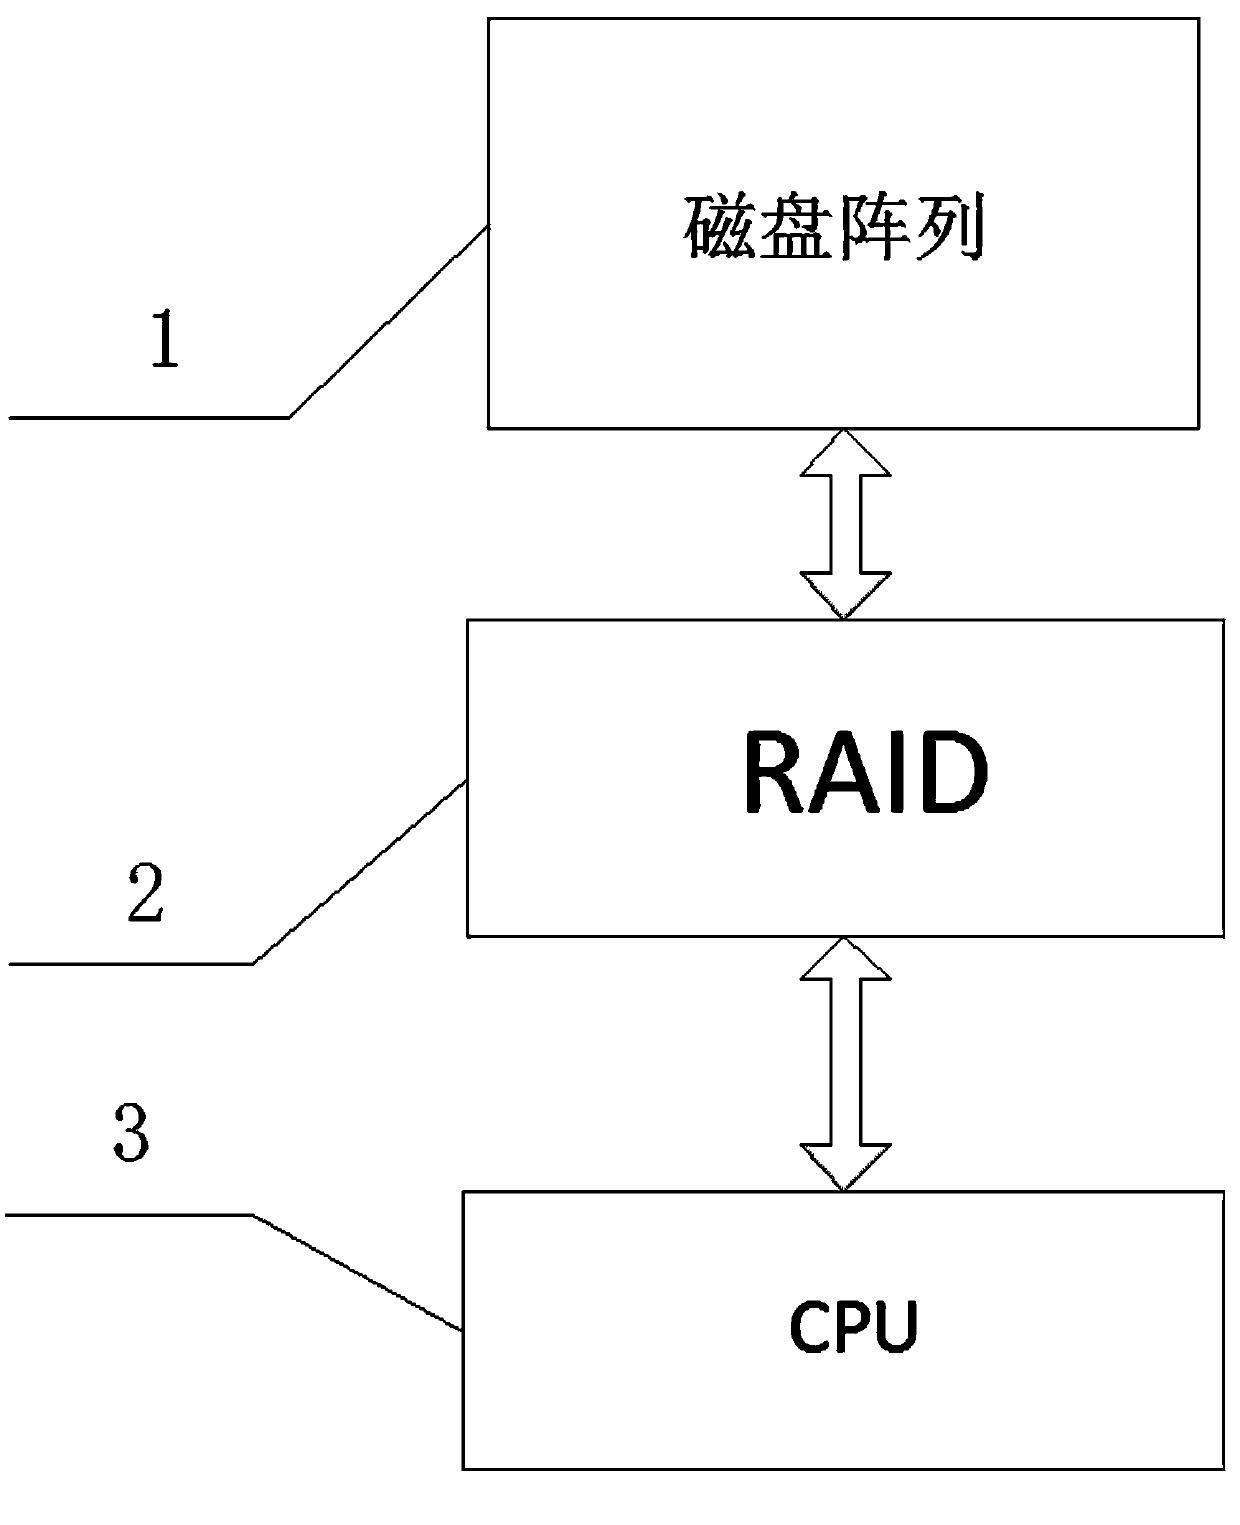 Storage control redundancy method based on multiple NUMA physical layer partitions